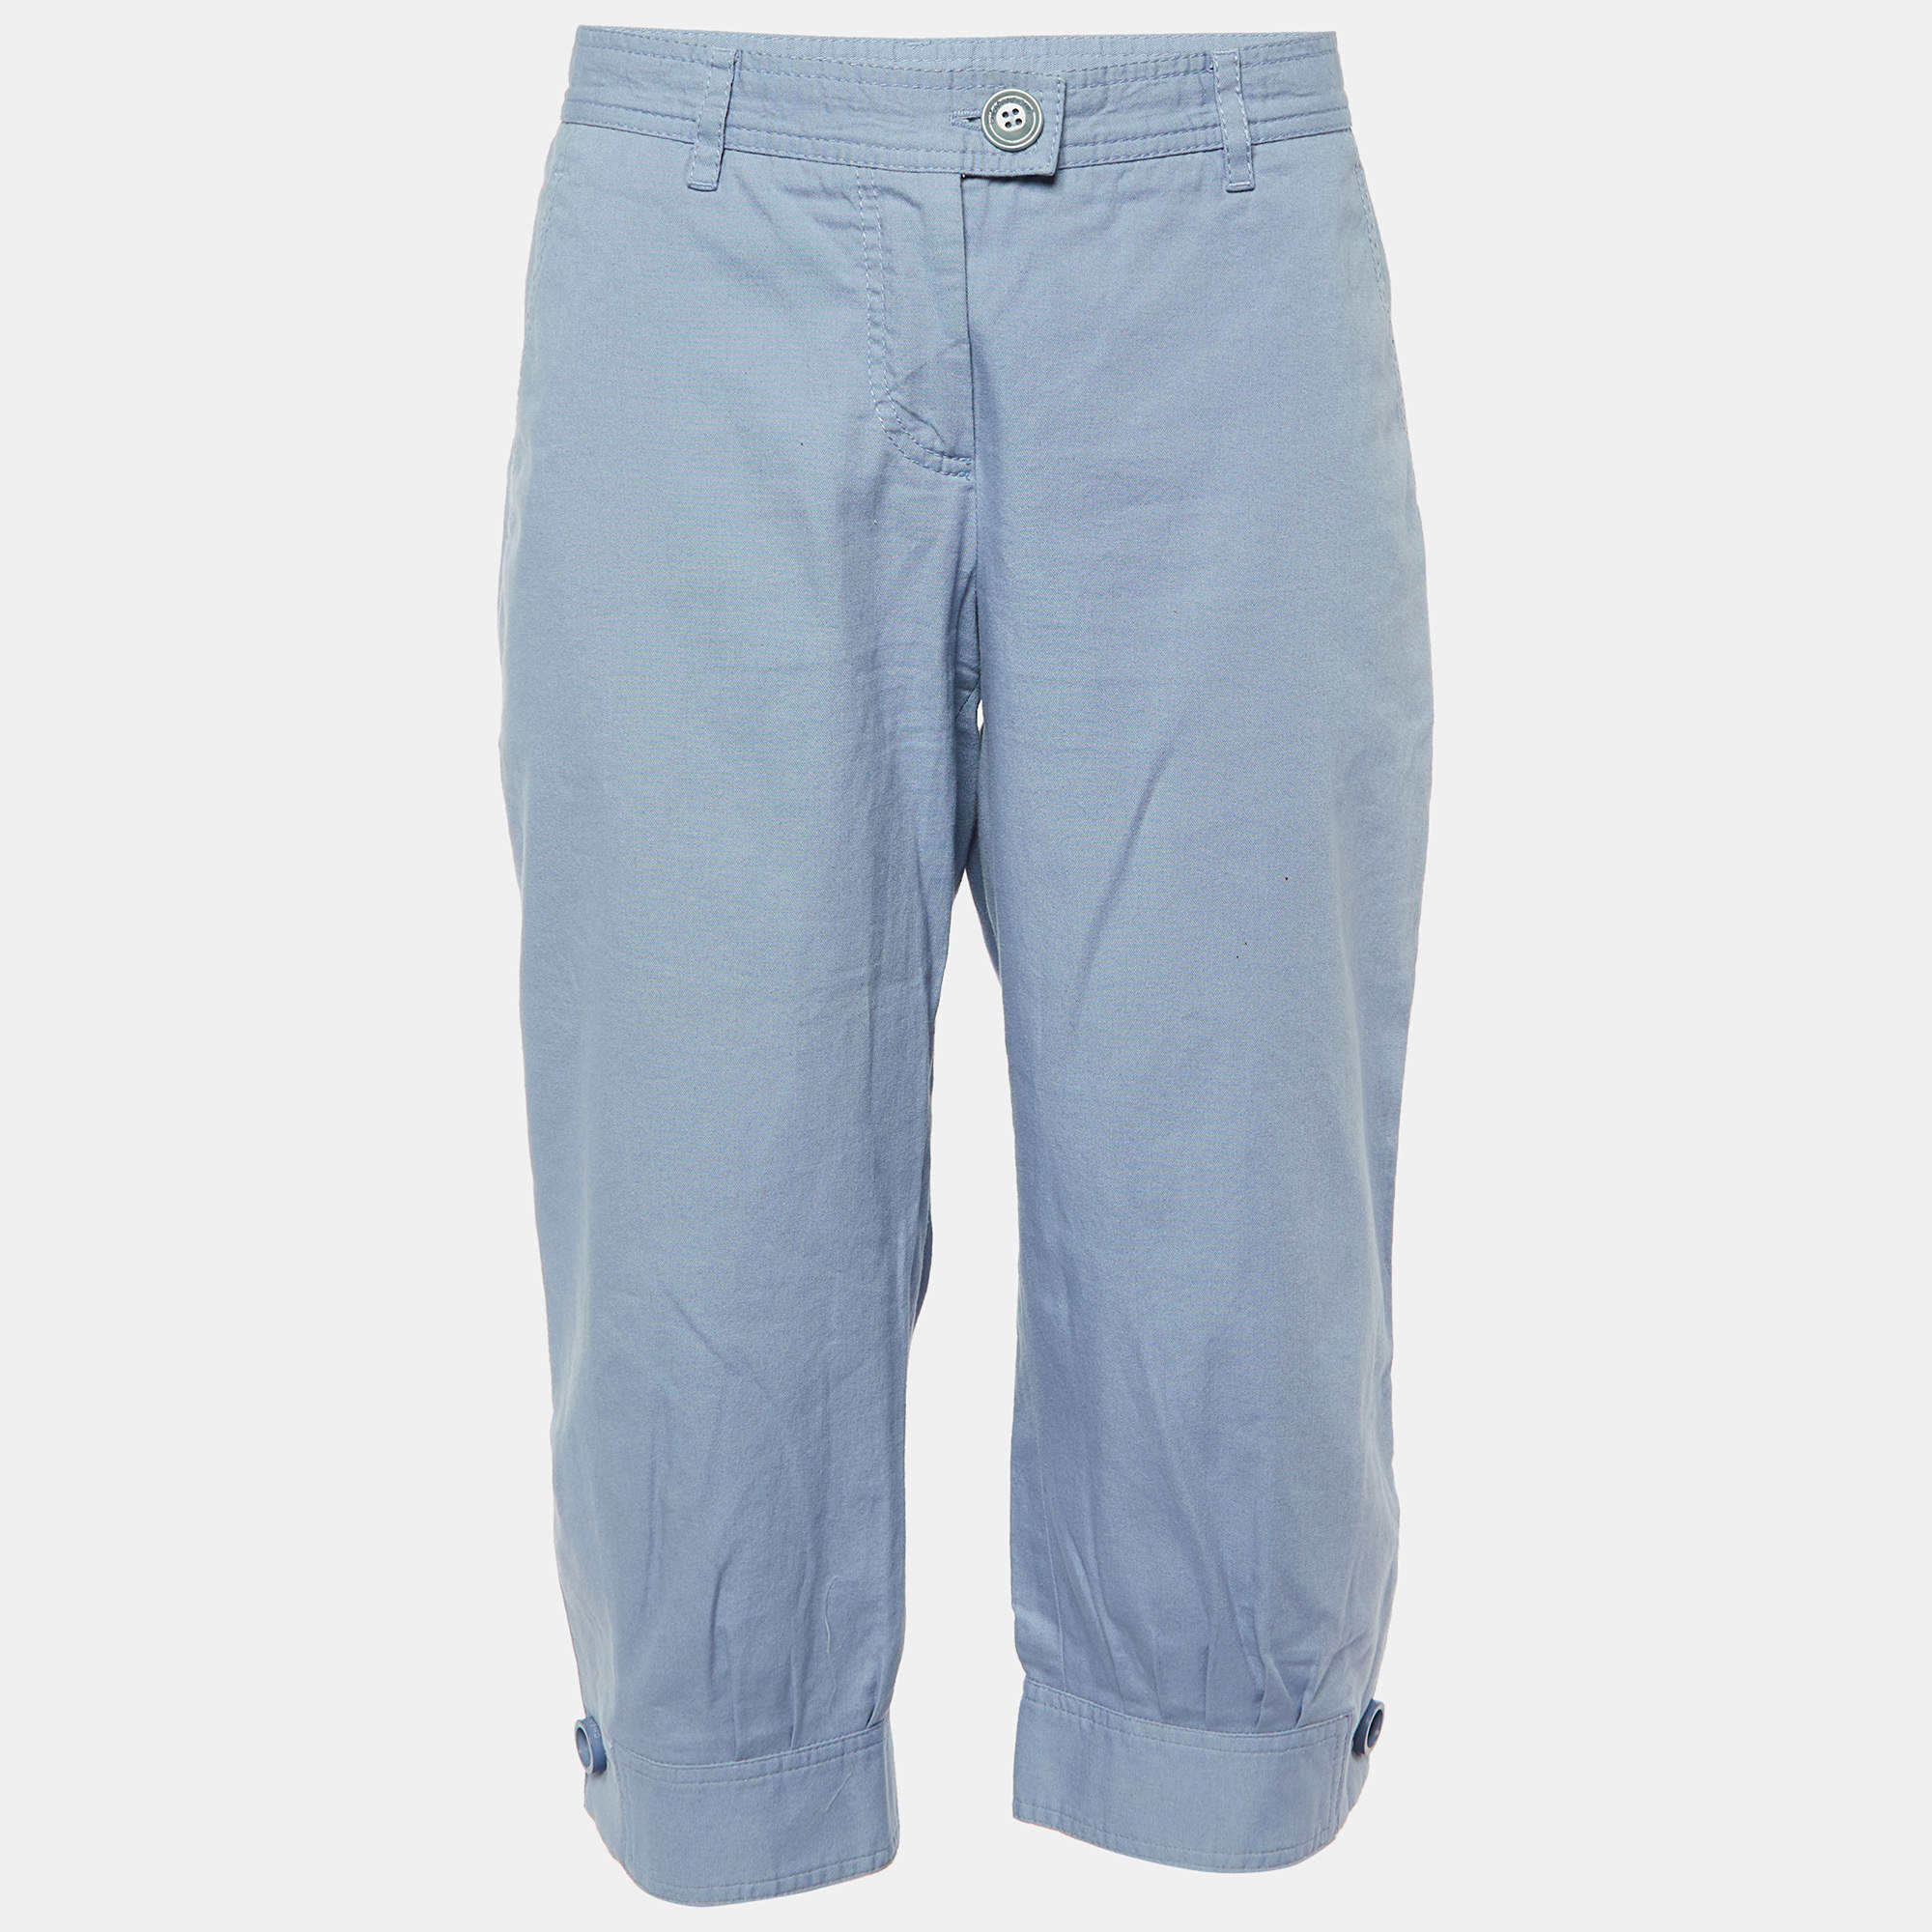 Moschino Cheap and Chic Light Blue Cotton Capri Pants M